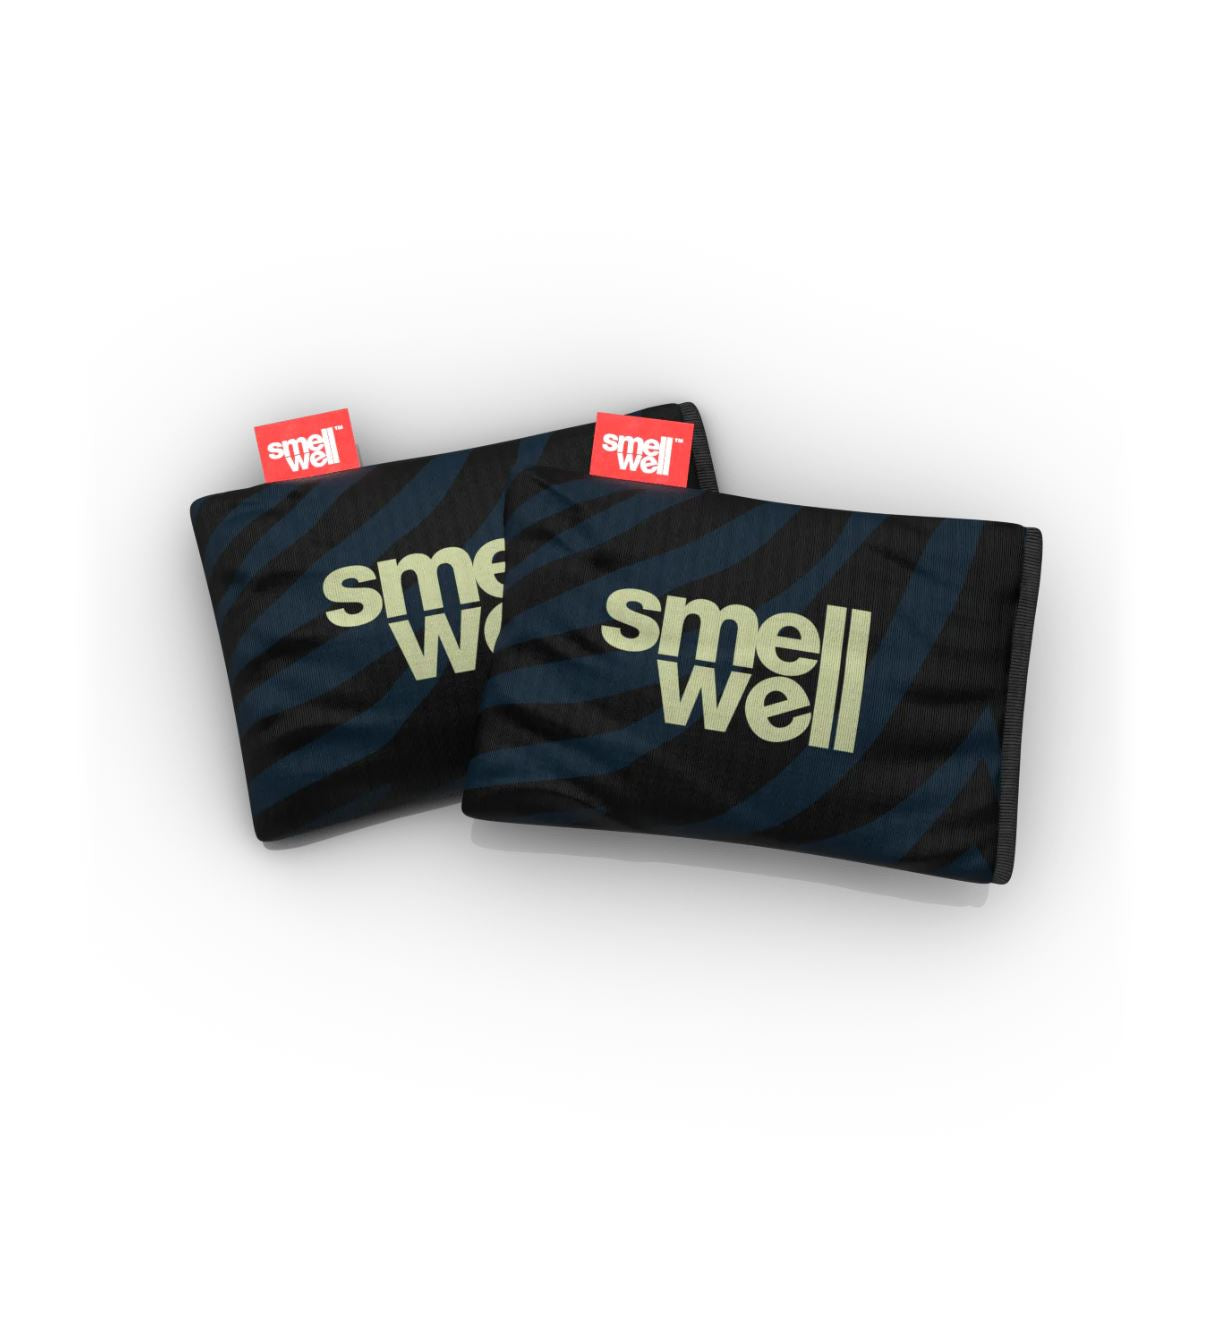 SmellWell Freshener Insert (Black Zebra)